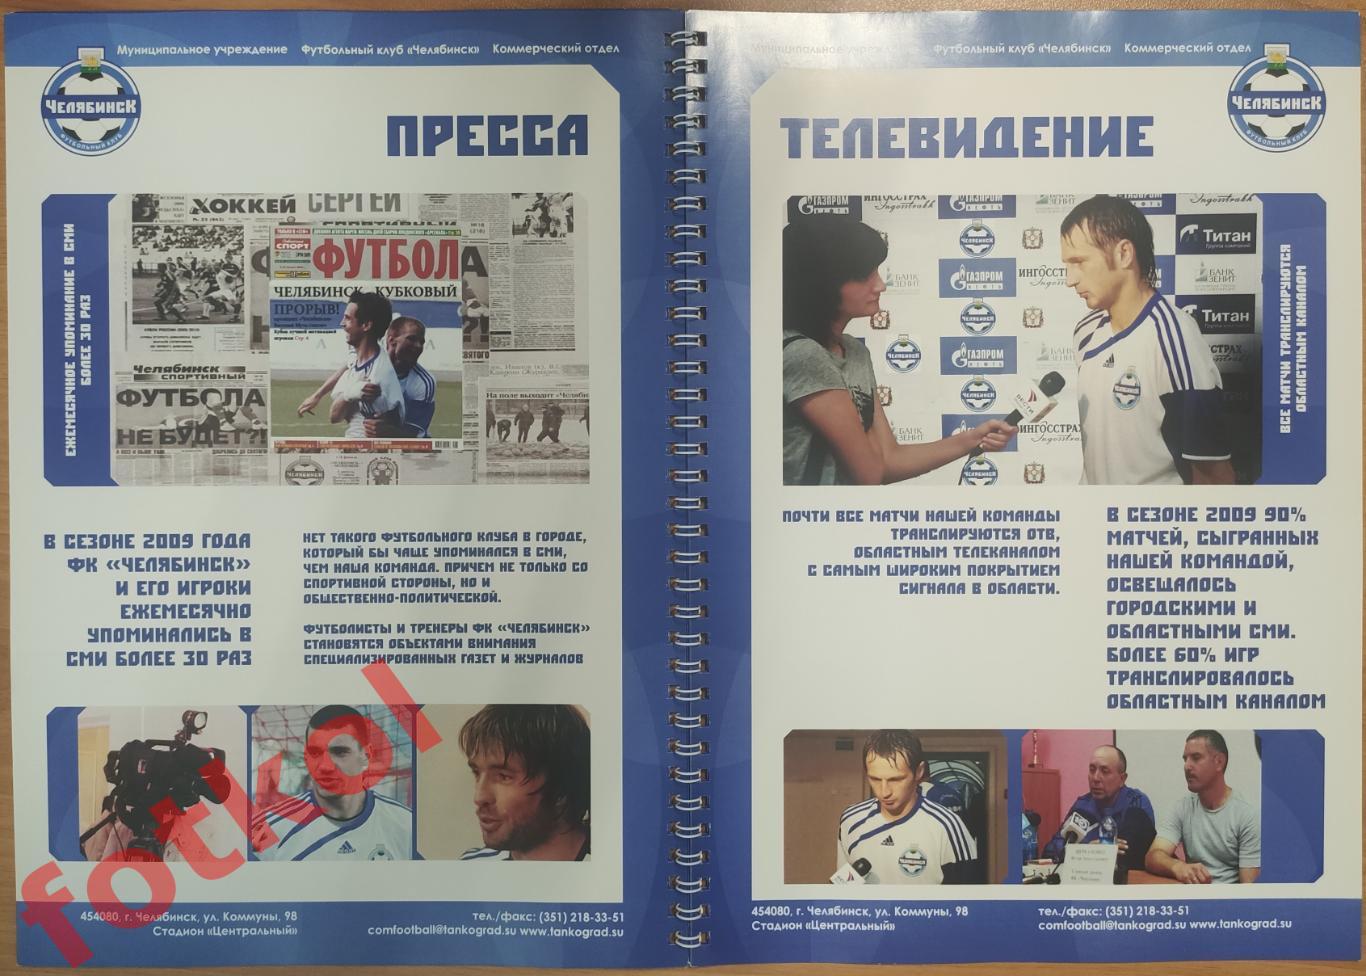 ФК ЧЕЛЯБИНСК 2012 - 2013 Буклет - презентация 2